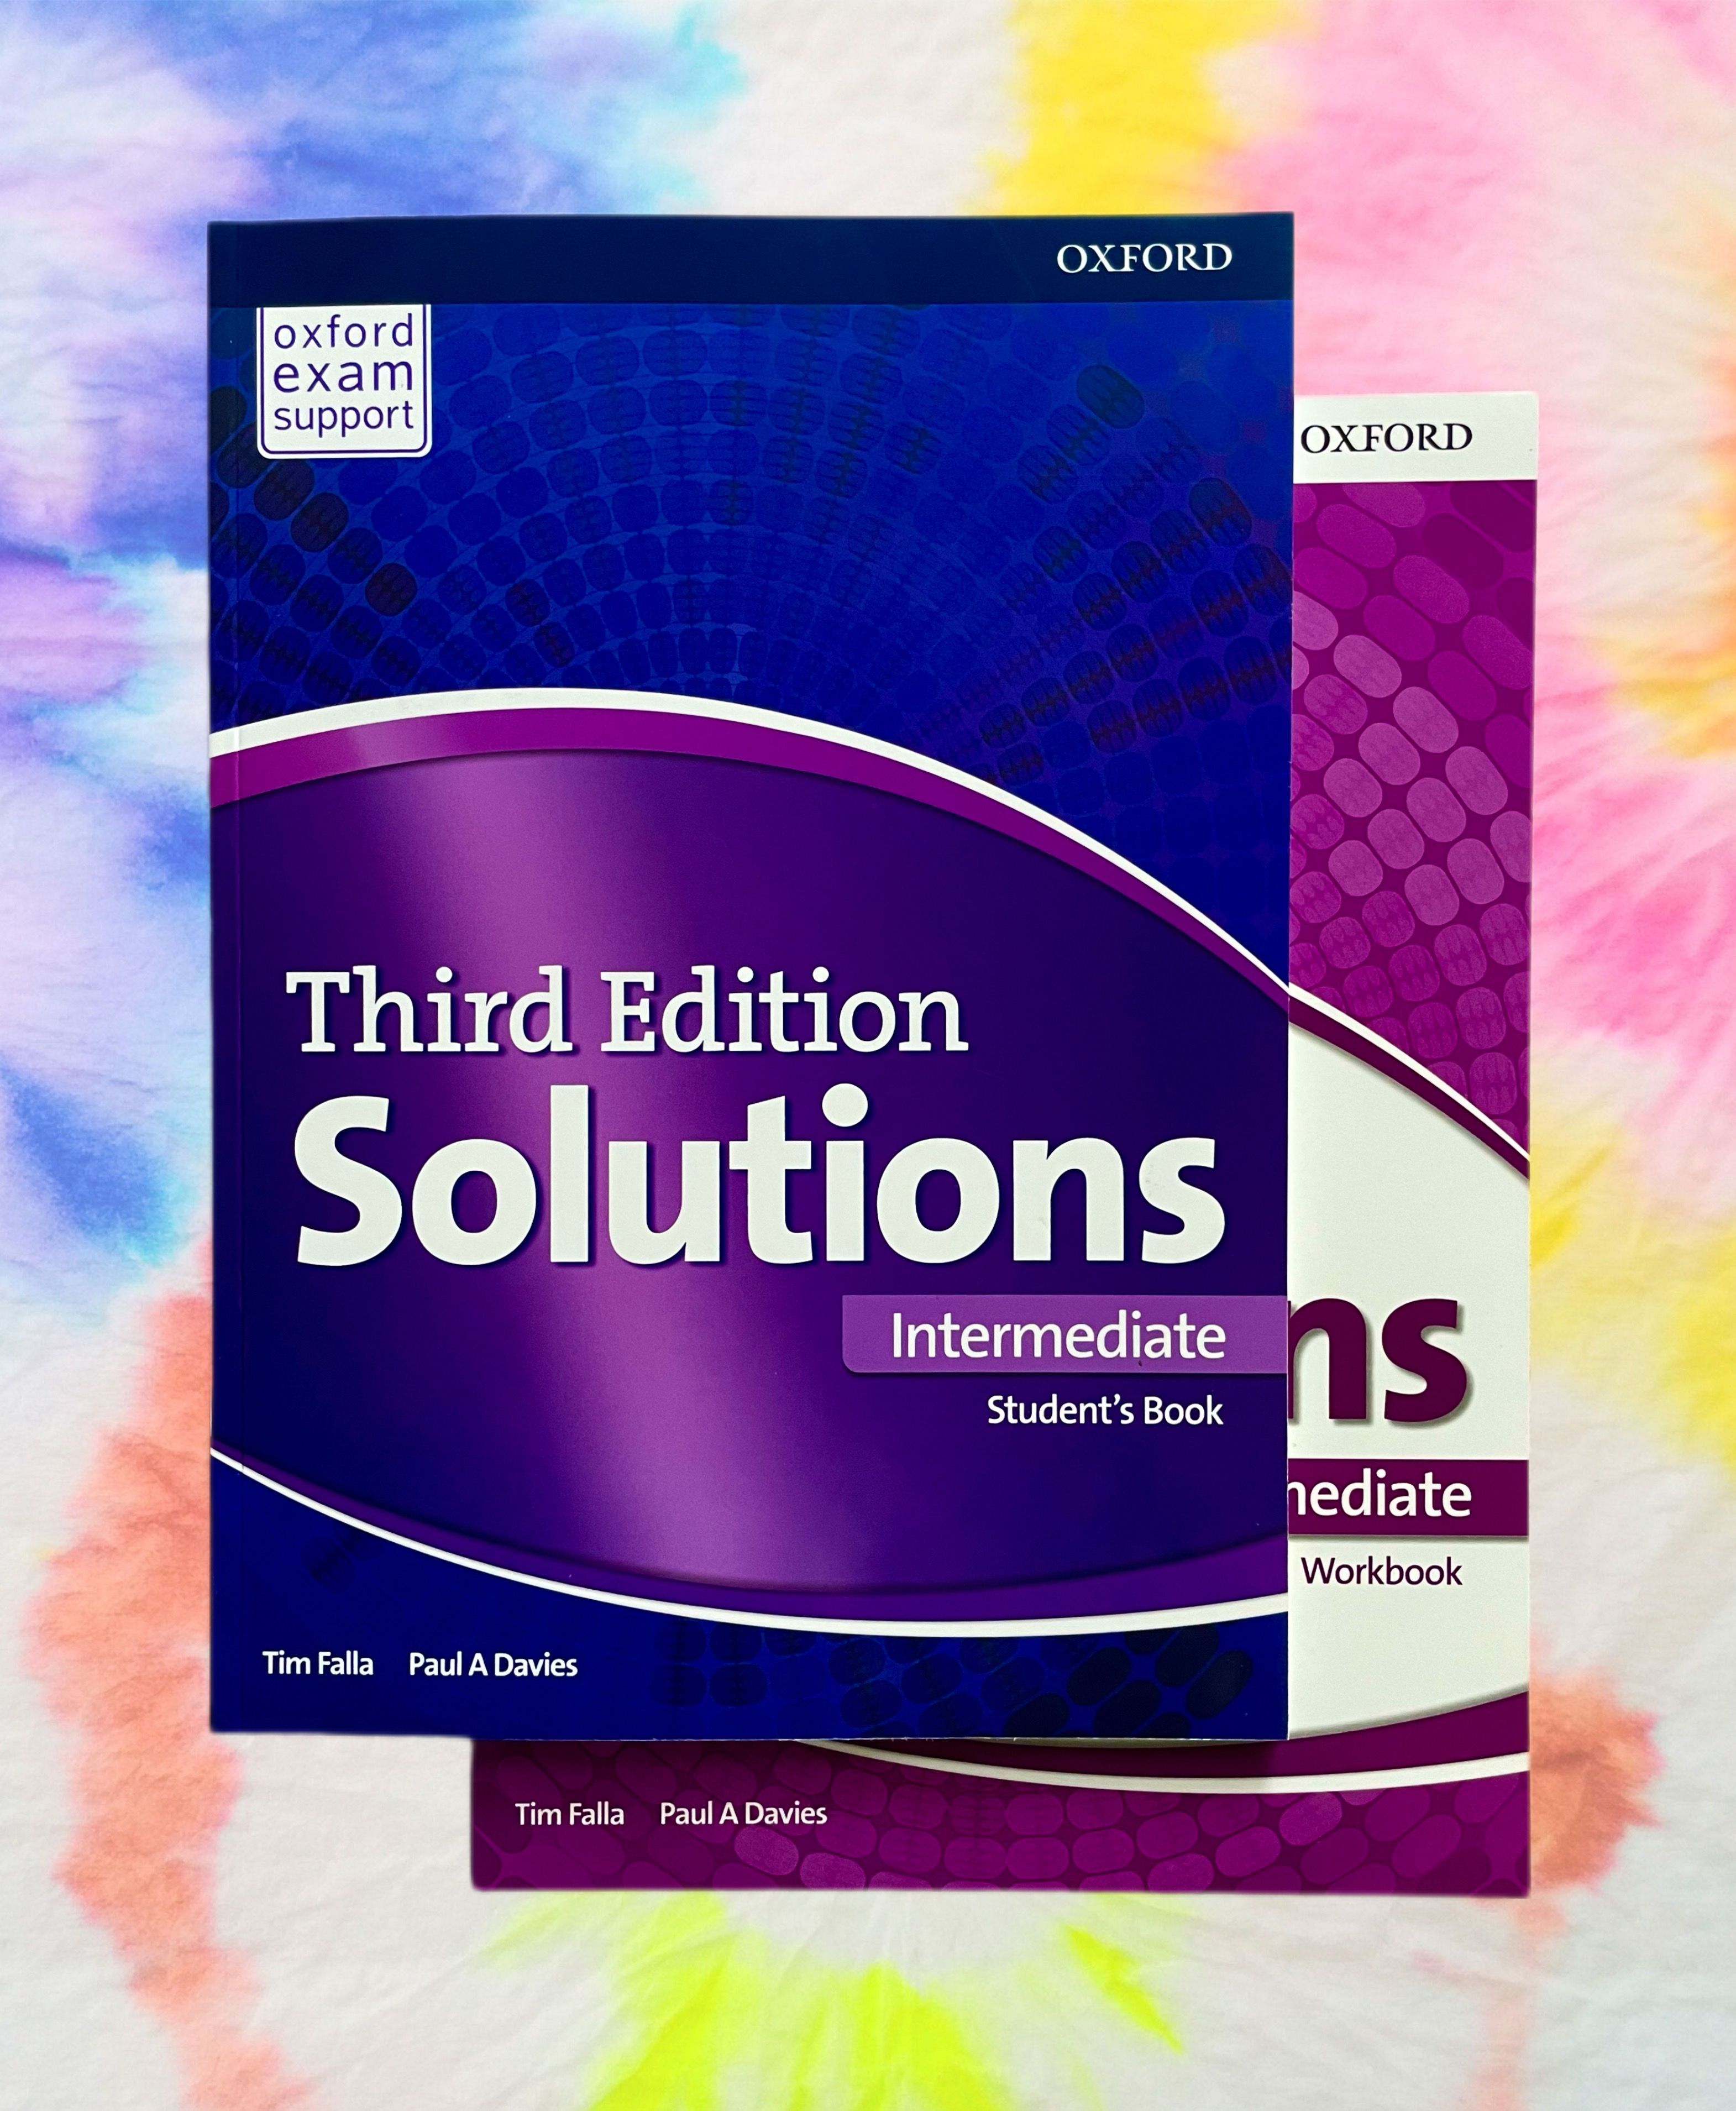 Английский solutions intermediate student book. Solutions Intermediate student's book. Solutions Intermediate 3rd Edition. Third Edition solutions Intermediate student's book. Workbook.